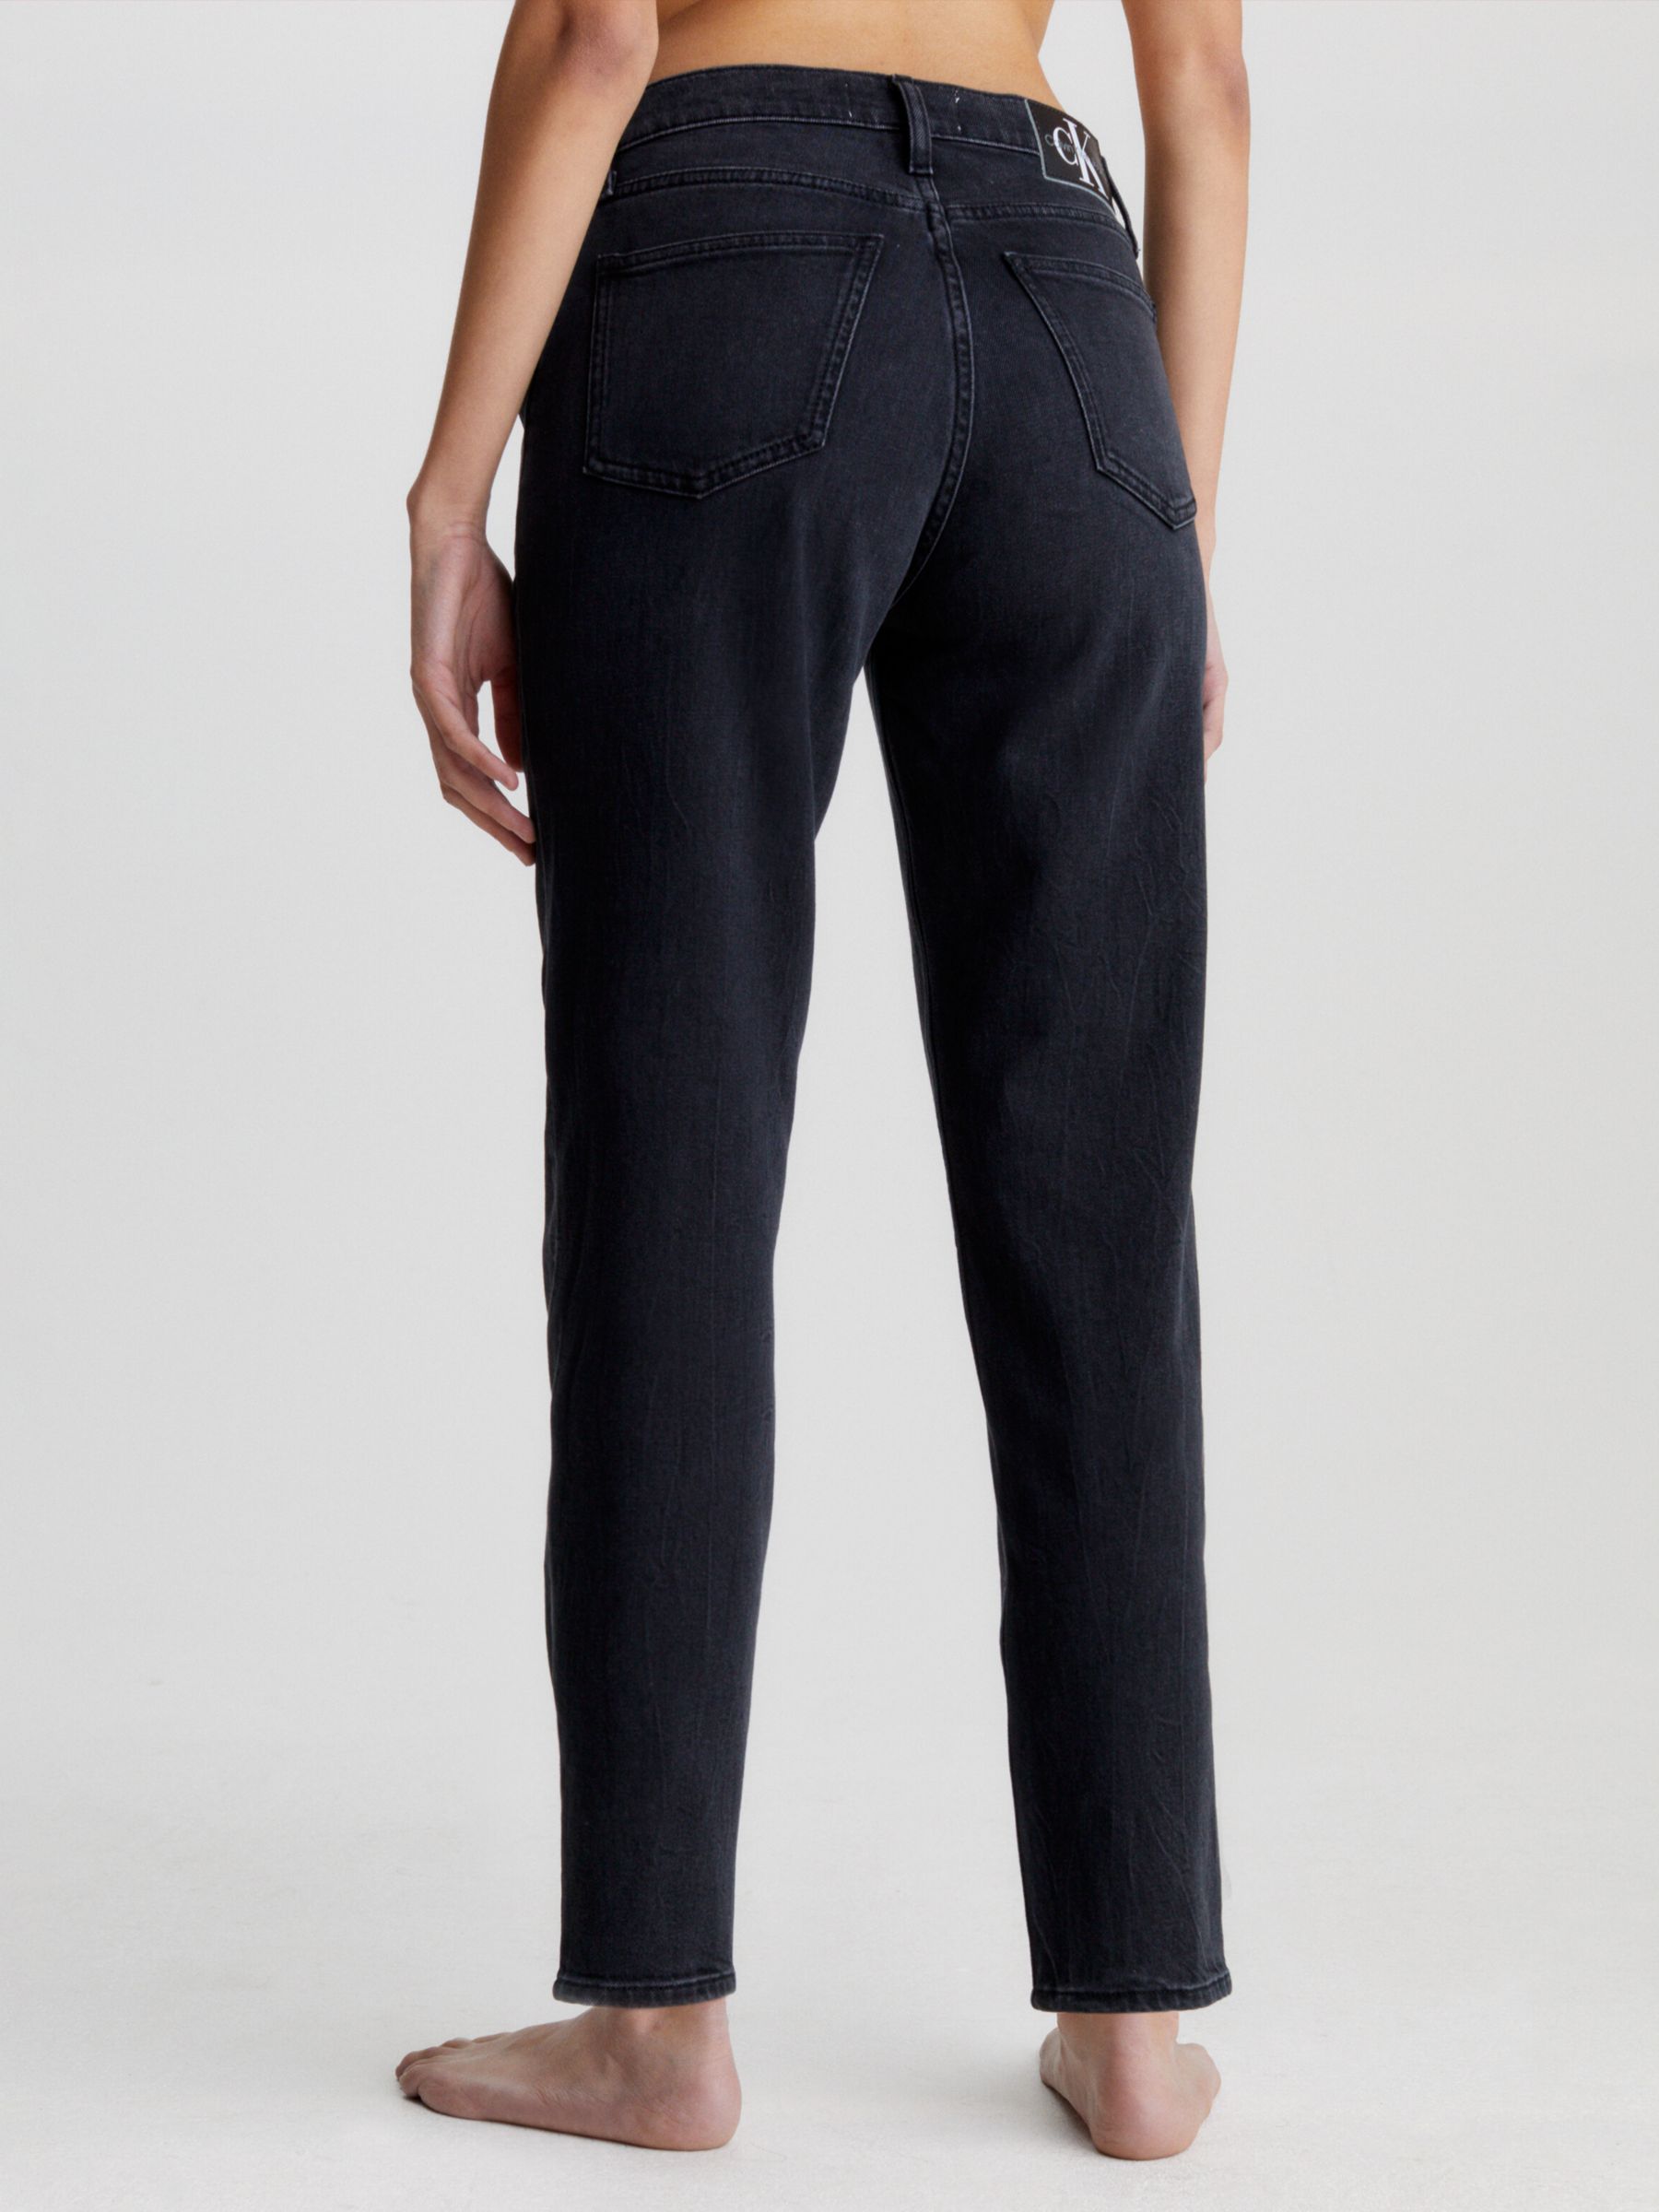 Calvin Klein Plain Mom Jeans, Denim Black, 25